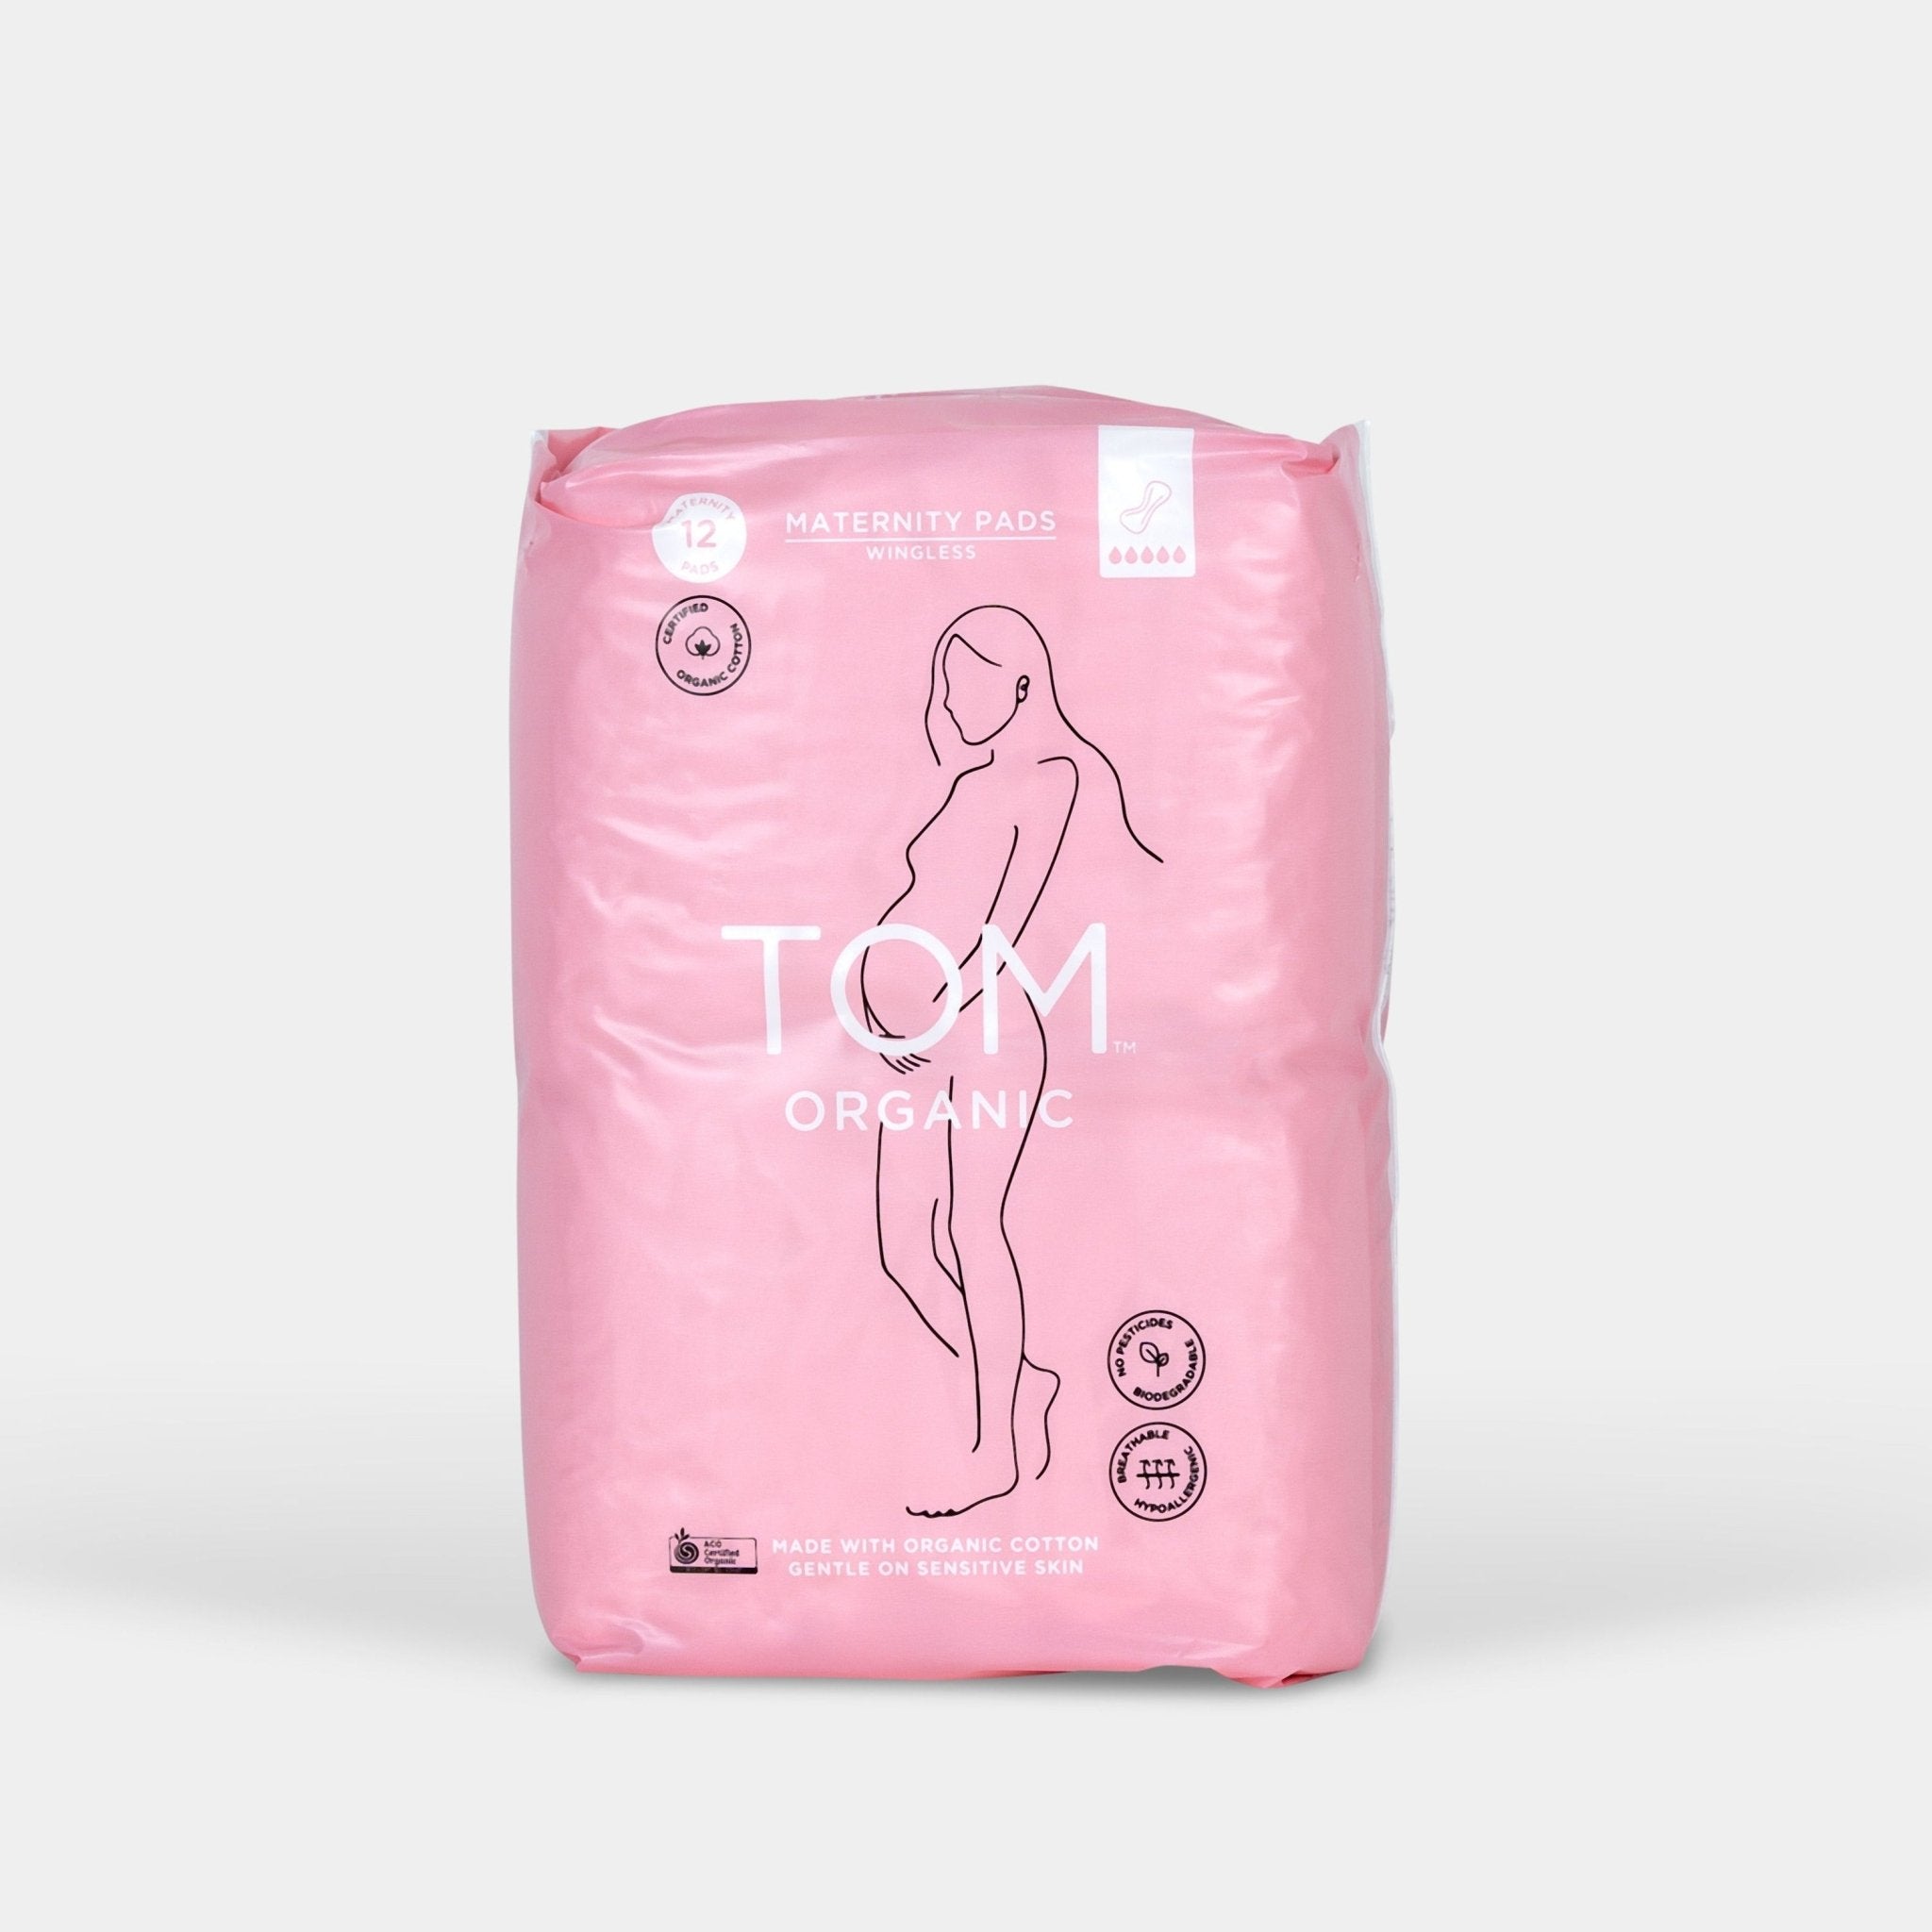 TOM Organic Maternity Pads - The Birth Store-Tom Organic